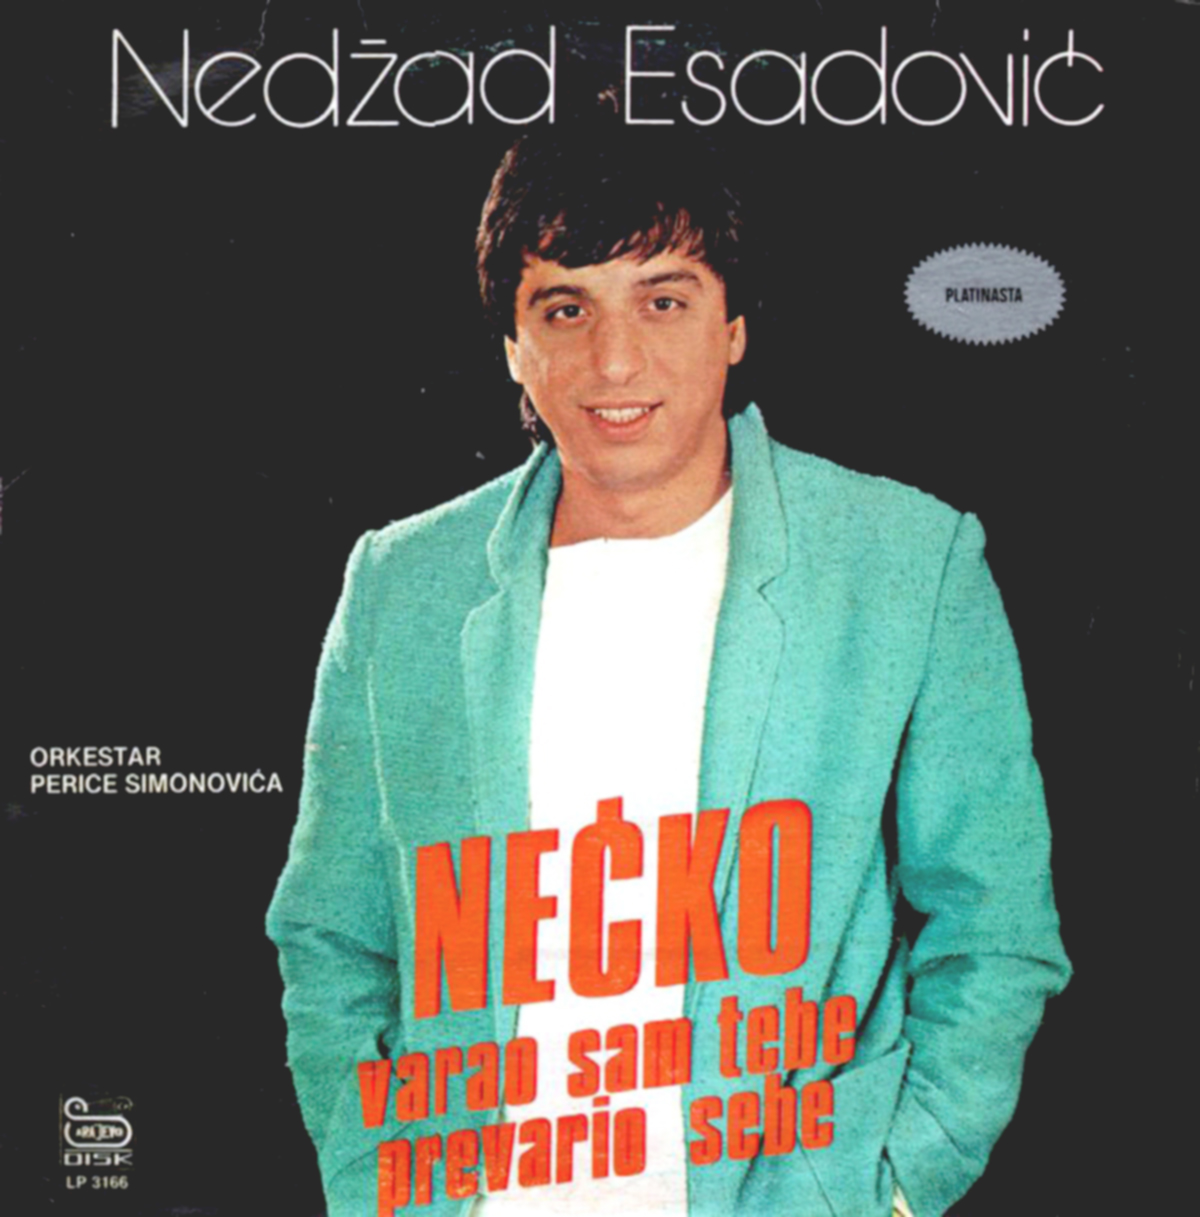 Nedzad Esadovic Necko - Diskografija 1985-Varao_Sam_Tebe_Prevario_Sebe